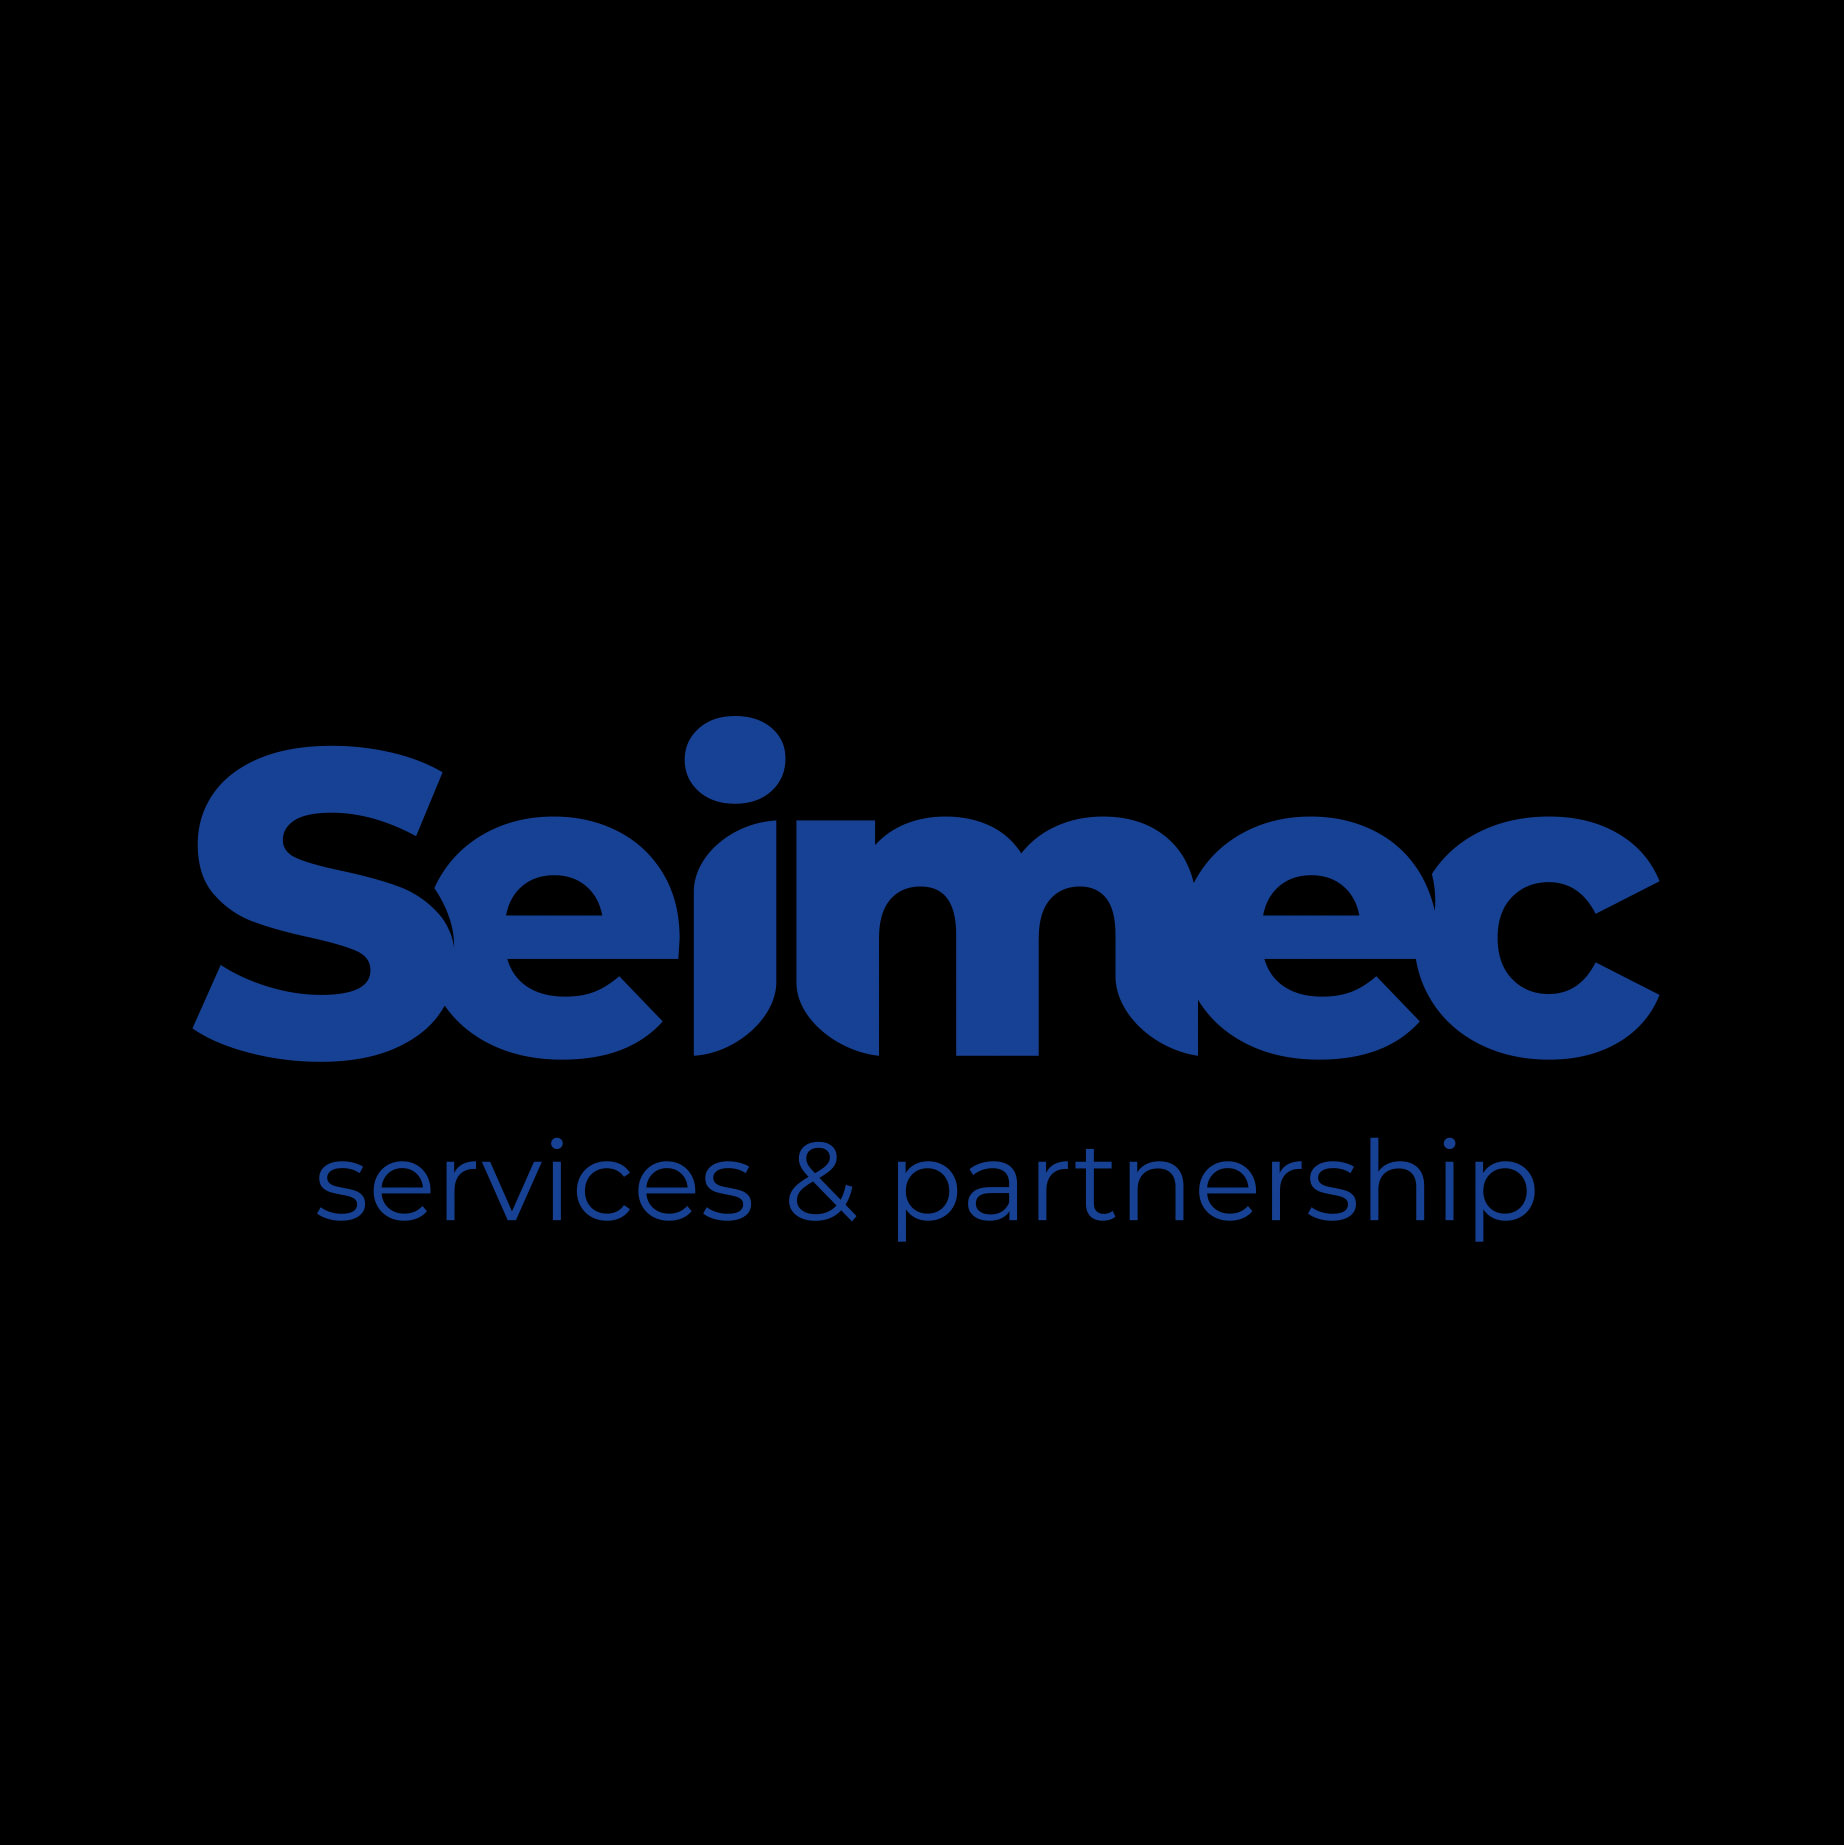 Seimec logo Therwiz Design